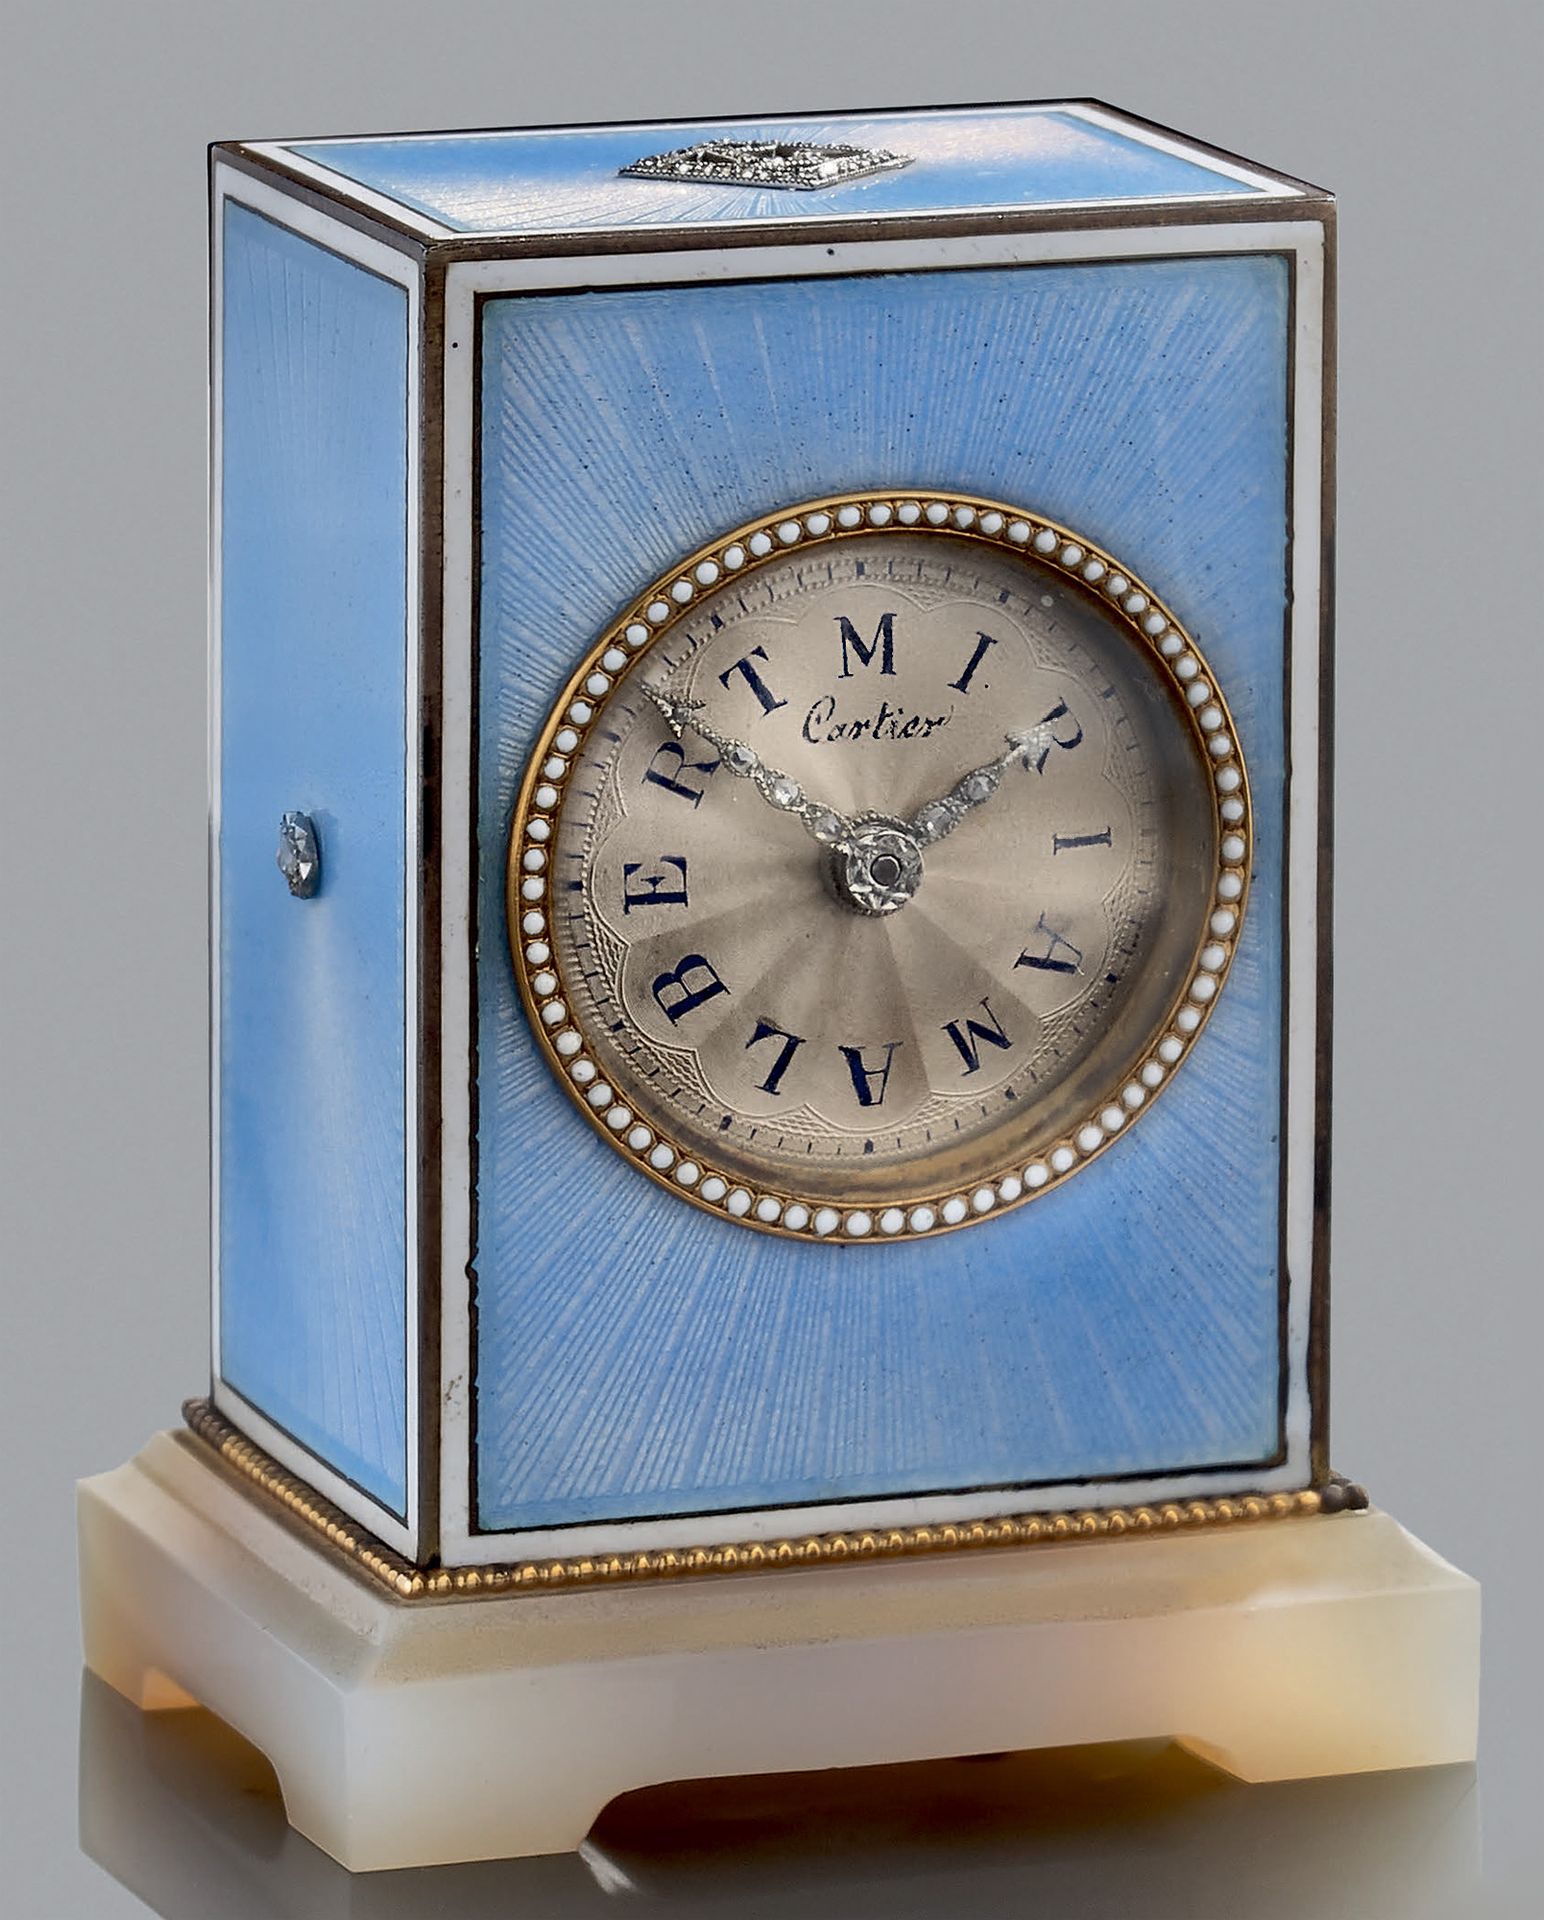 CARTIER 800千分之一的镀金旅行钟，在放射状的玑镂背景上涂有半透明的蓝色珐琅，并以白色珐琅网加强。它放置在一个玛瑙底座上。银色表盘上绘有阿拉伯数字 "A&hellip;